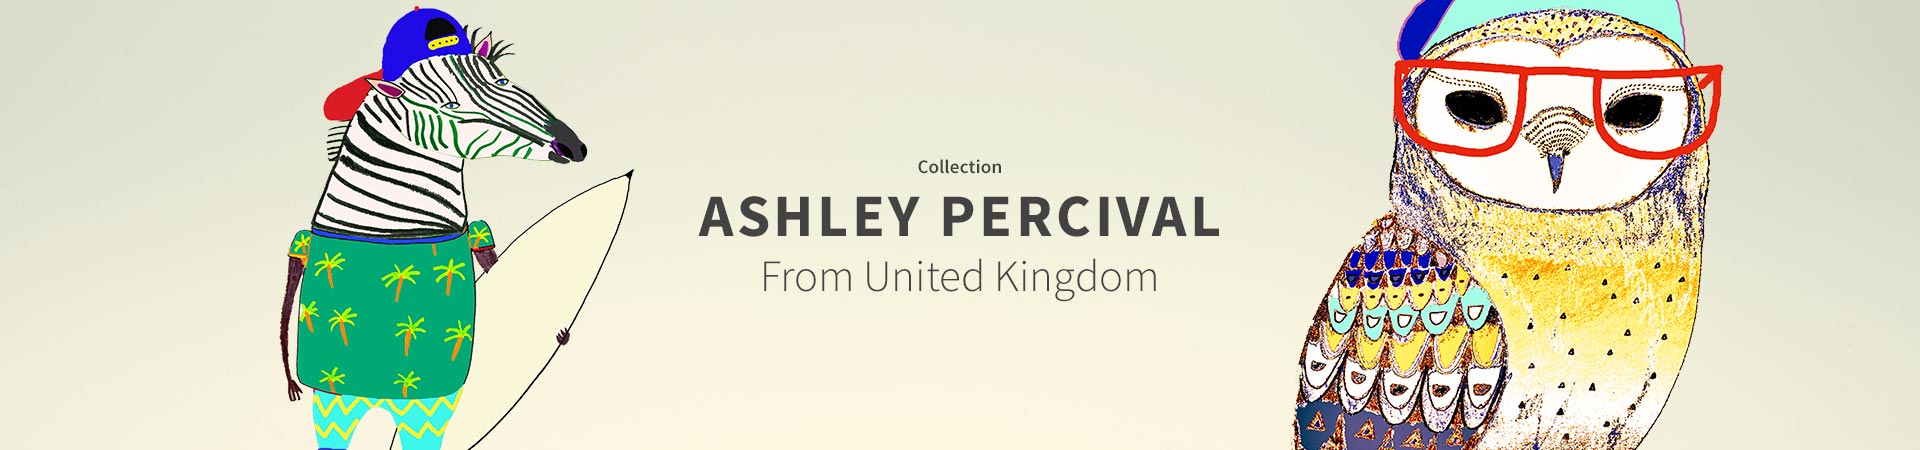 Collection Ashley Percival